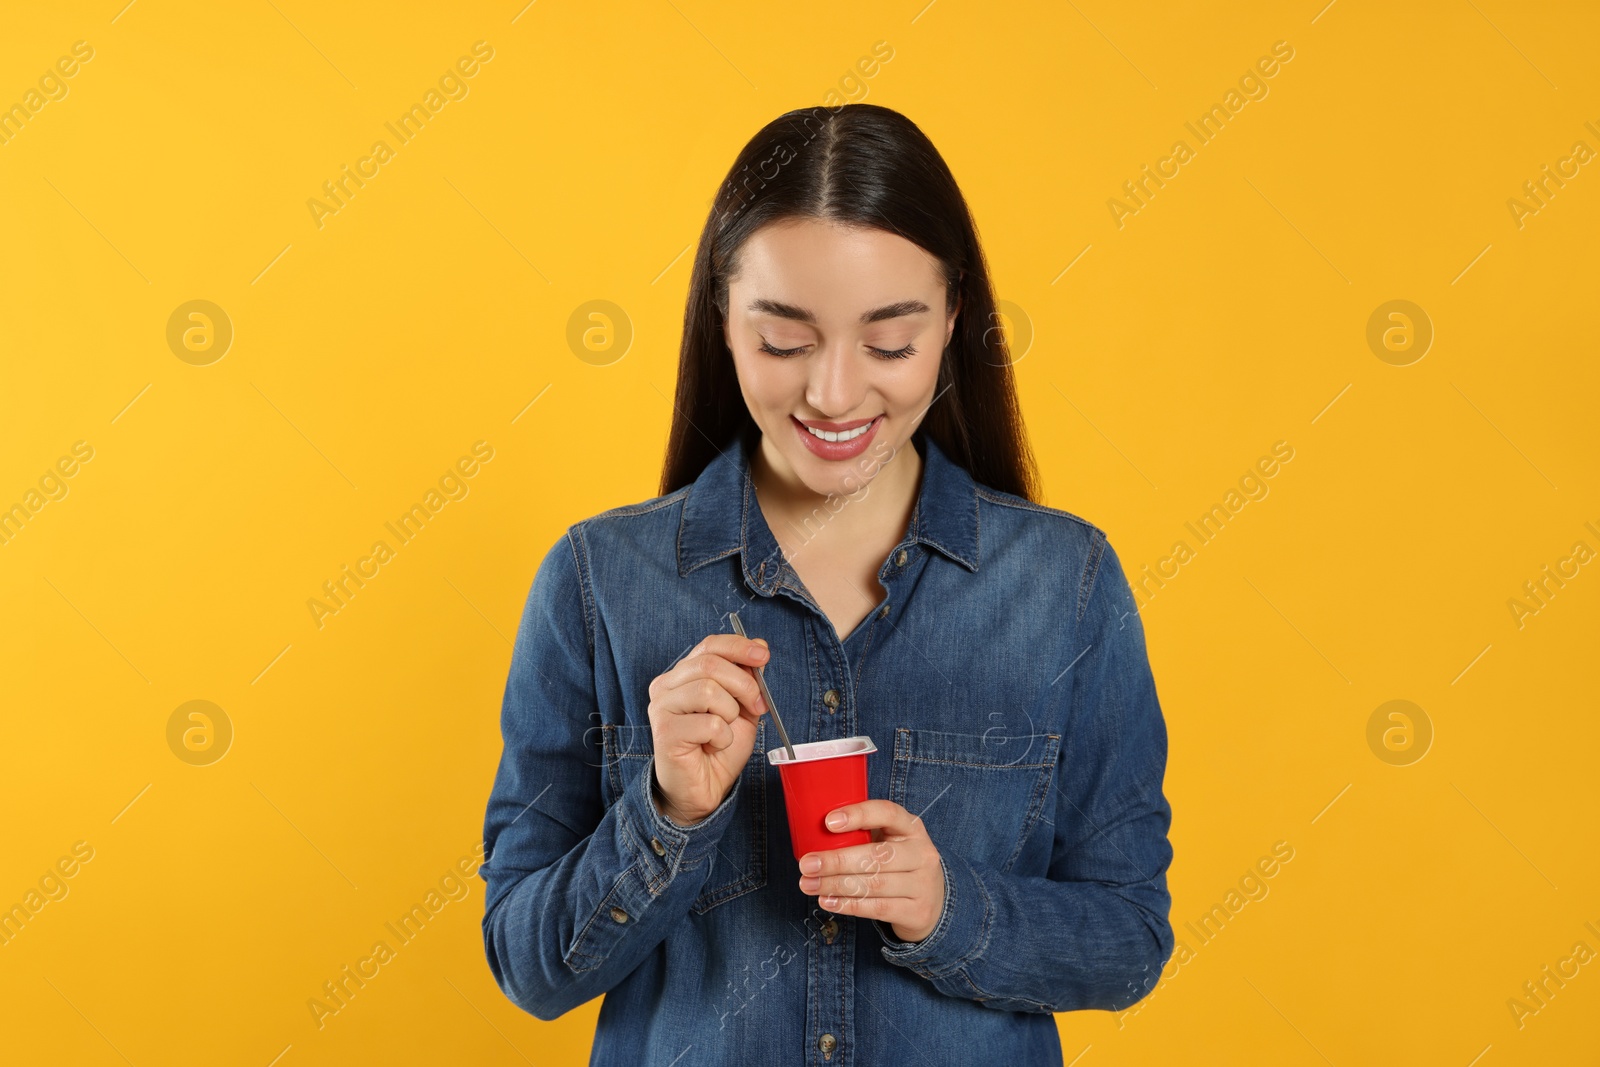 Photo of Happy woman with tasty yogurt on orange background